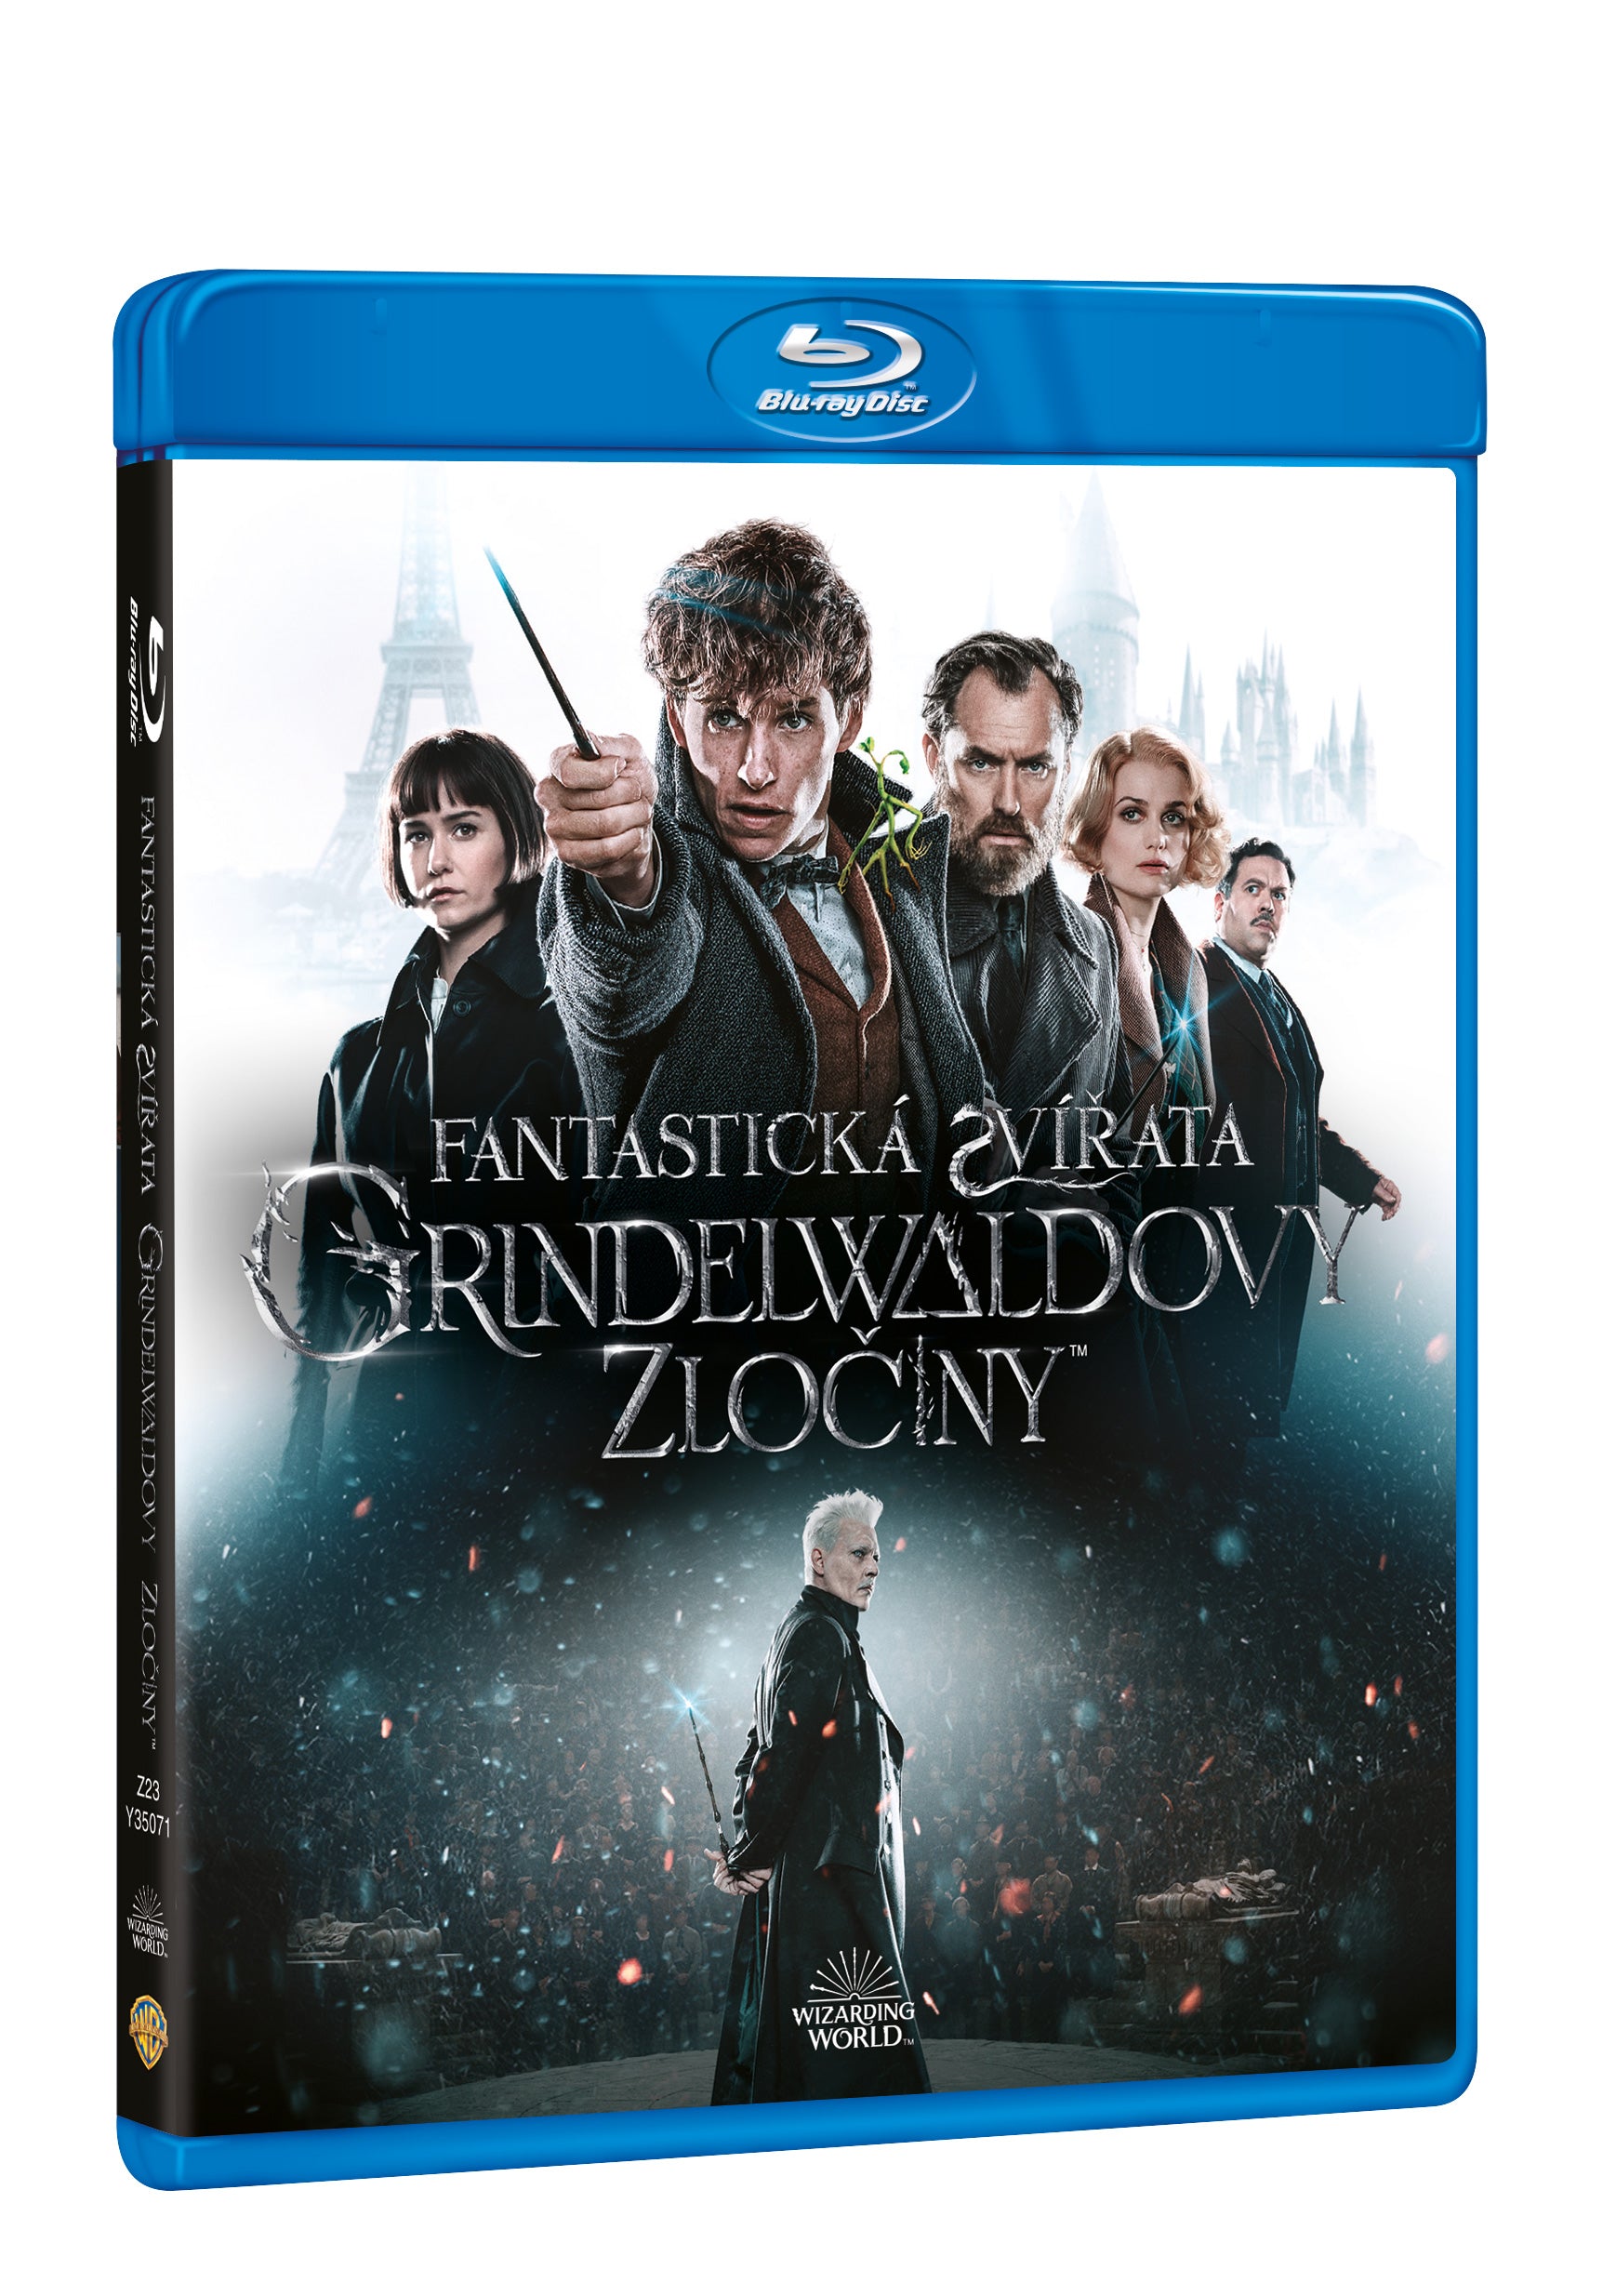 Fantasticka zvirata: Grindelwaldovy zlociny BD / Fantastic Beasts: The Crimes of Grindelwald - Czech version